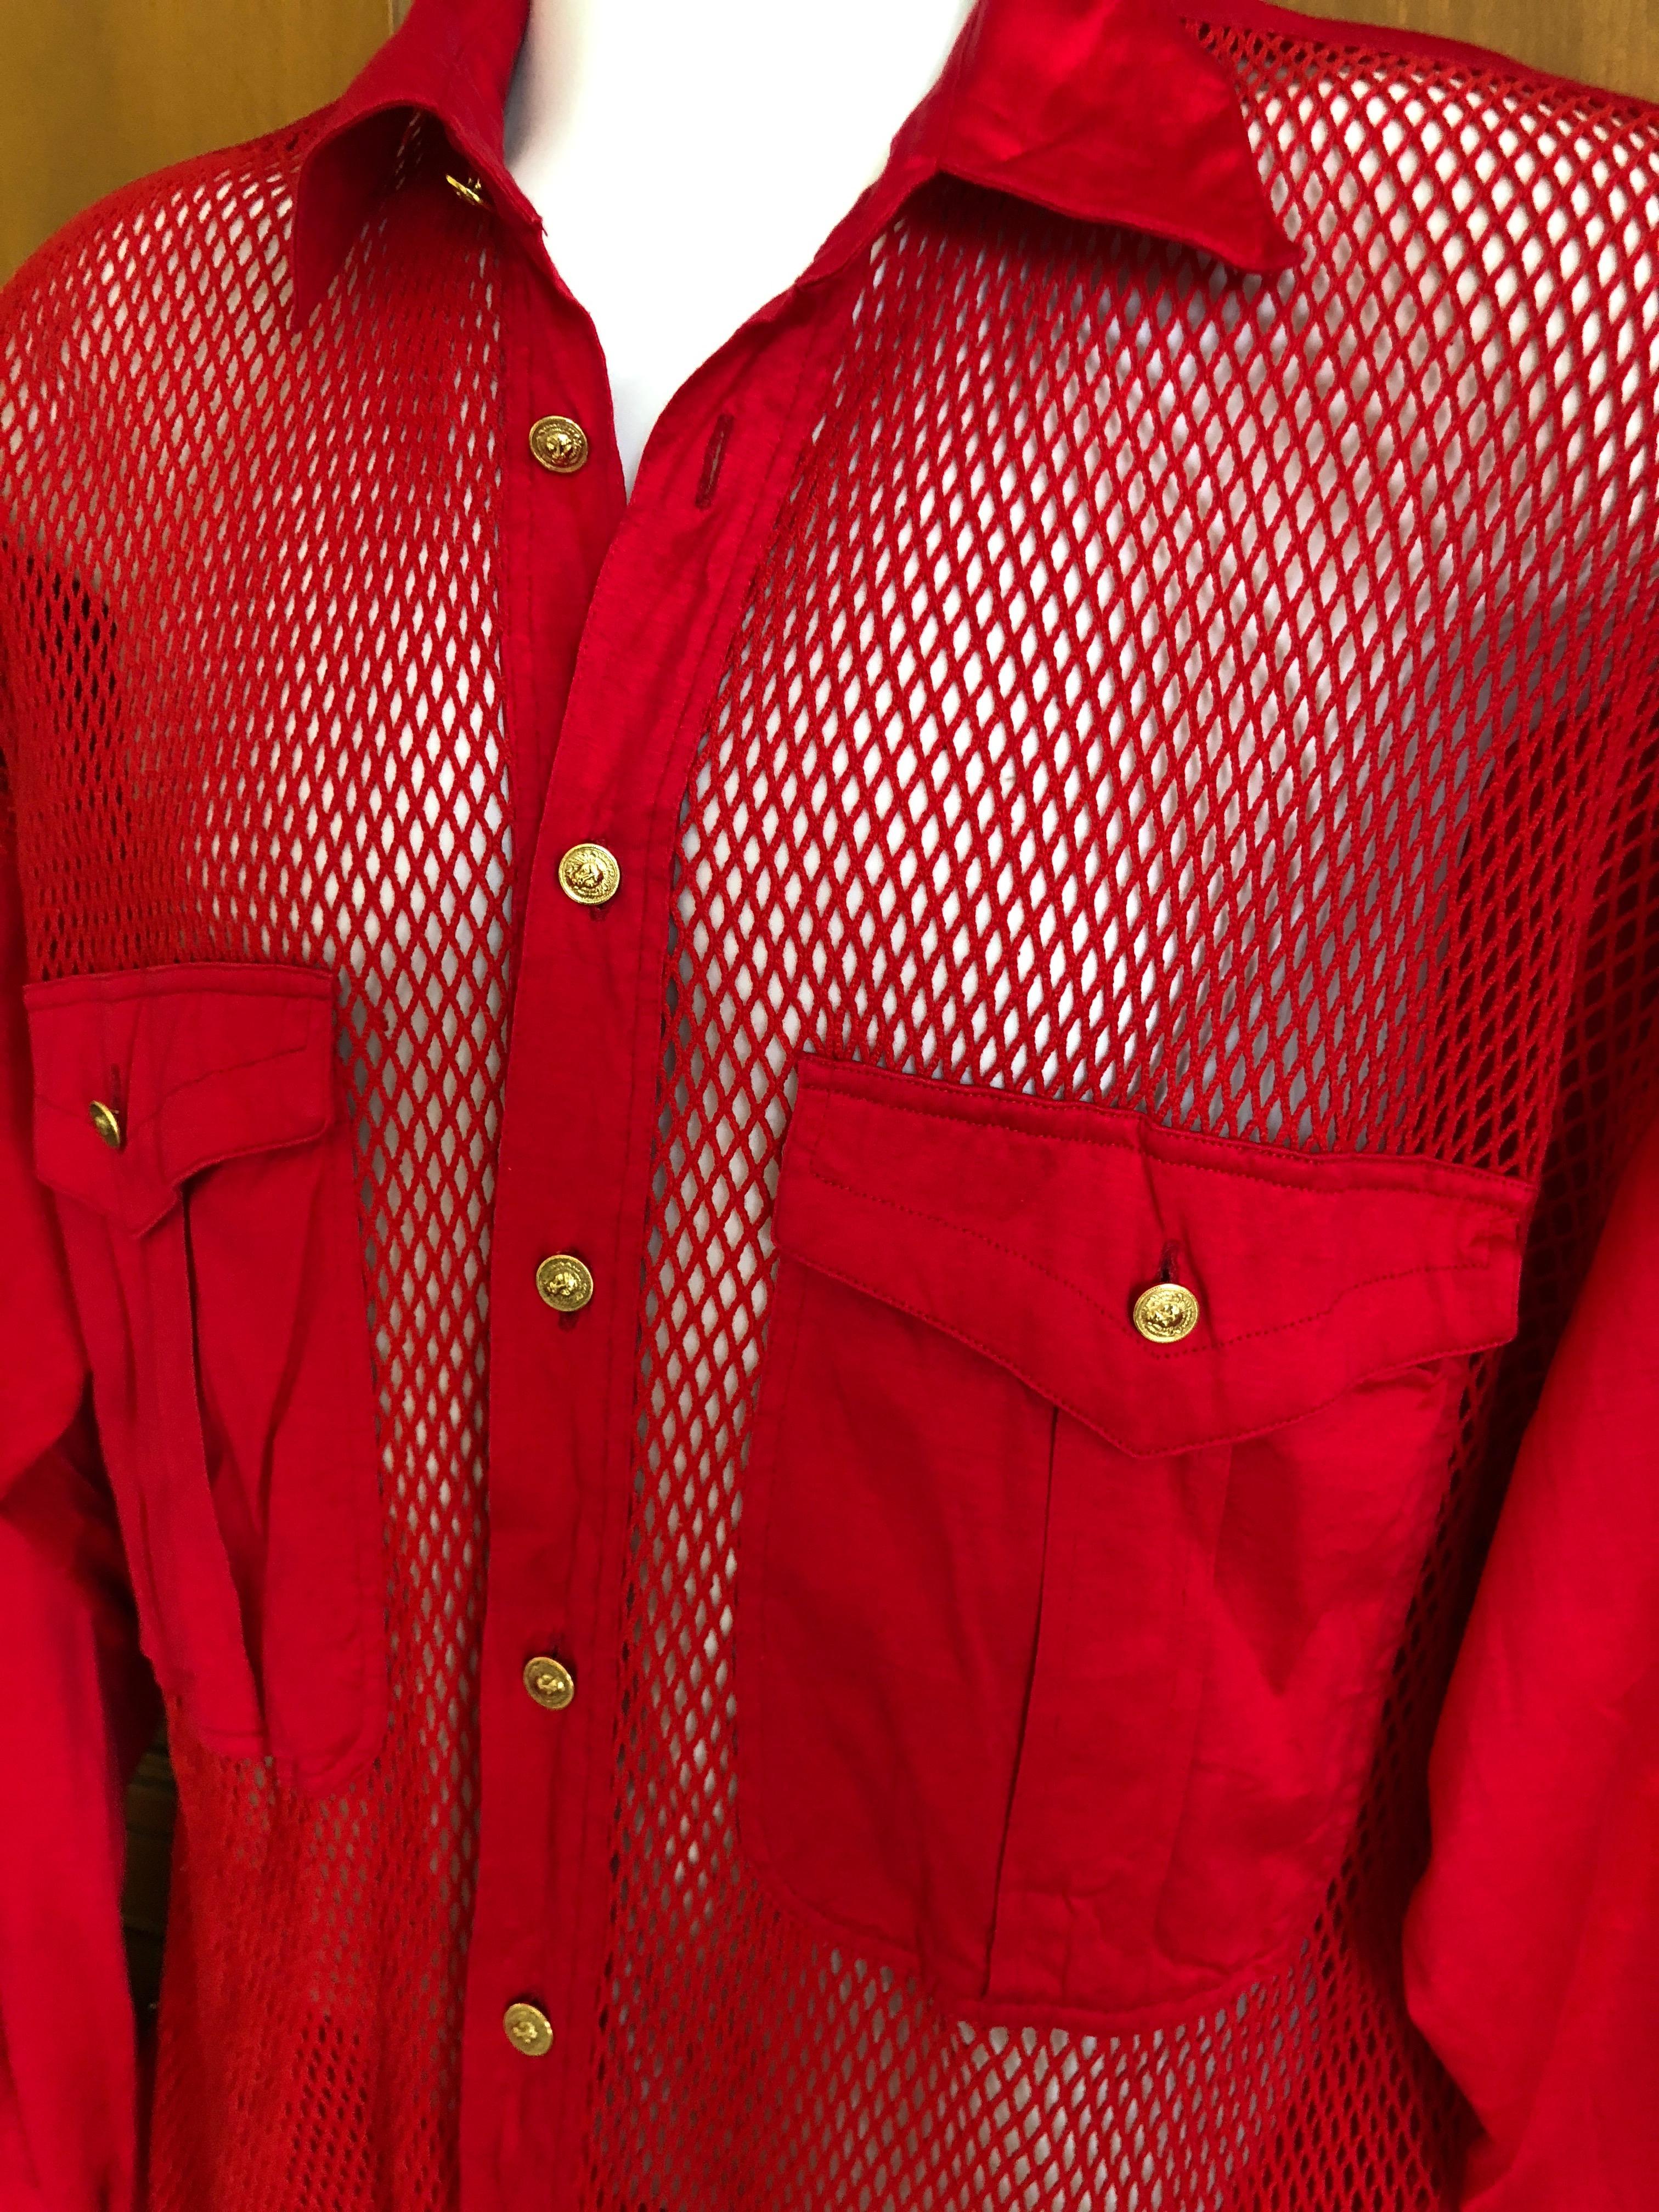 Versus Gianni Versace Rare 1993 Red Sheer Mesh Men's Large Shirt  For Sale 1